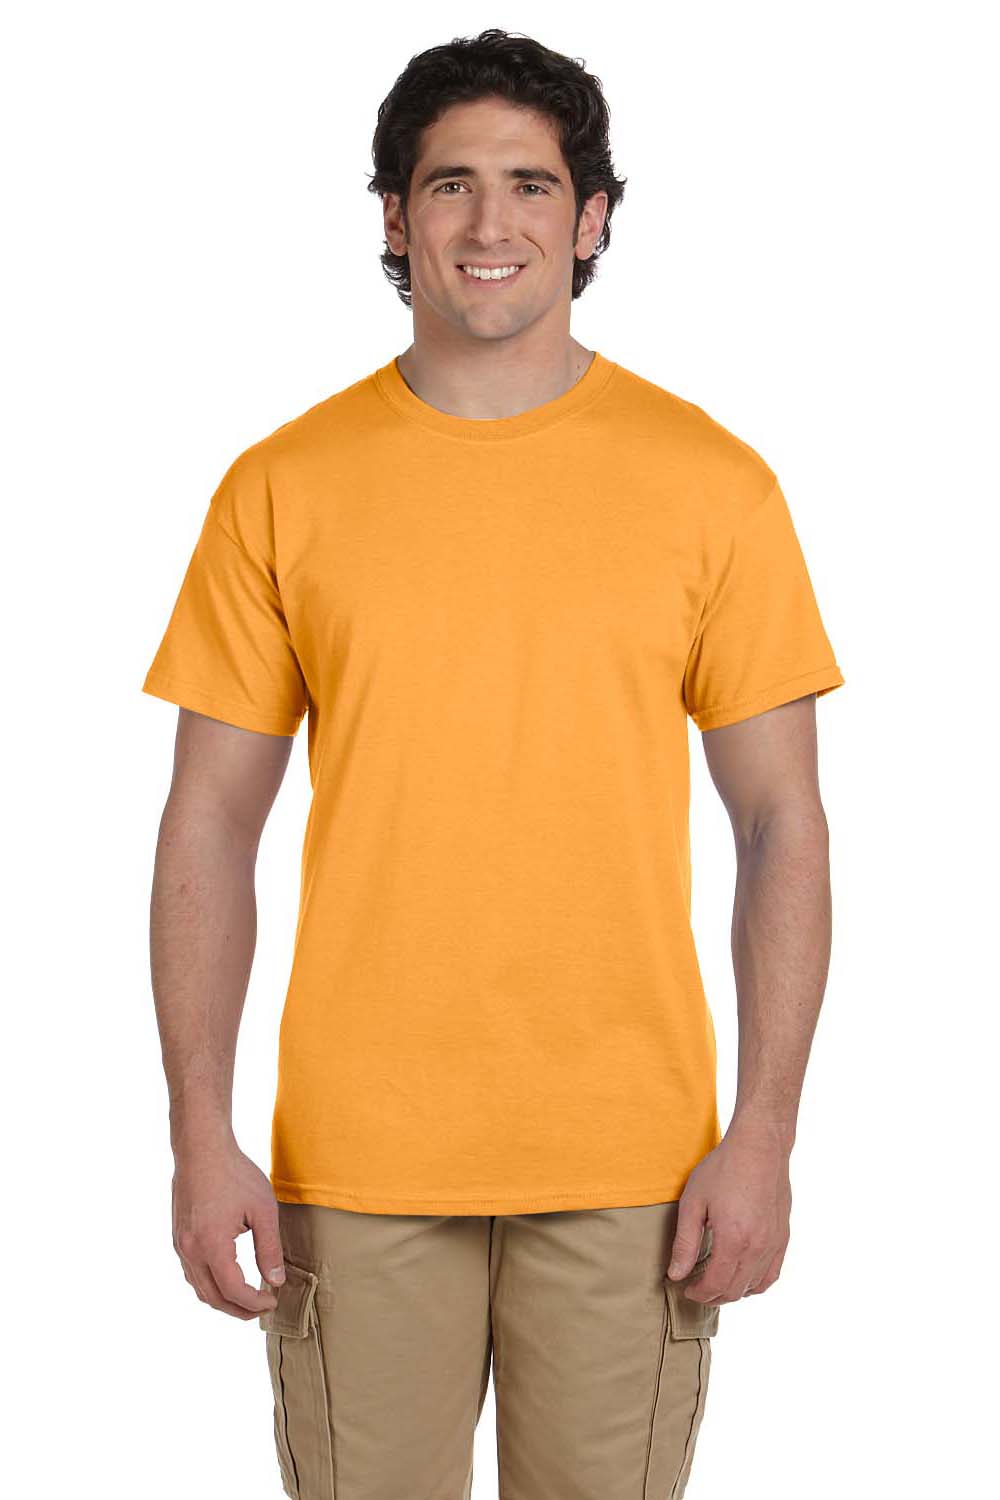 Hanes 5170 Mens EcoSmart Short Sleeve Crewneck T-Shirt Gold Front